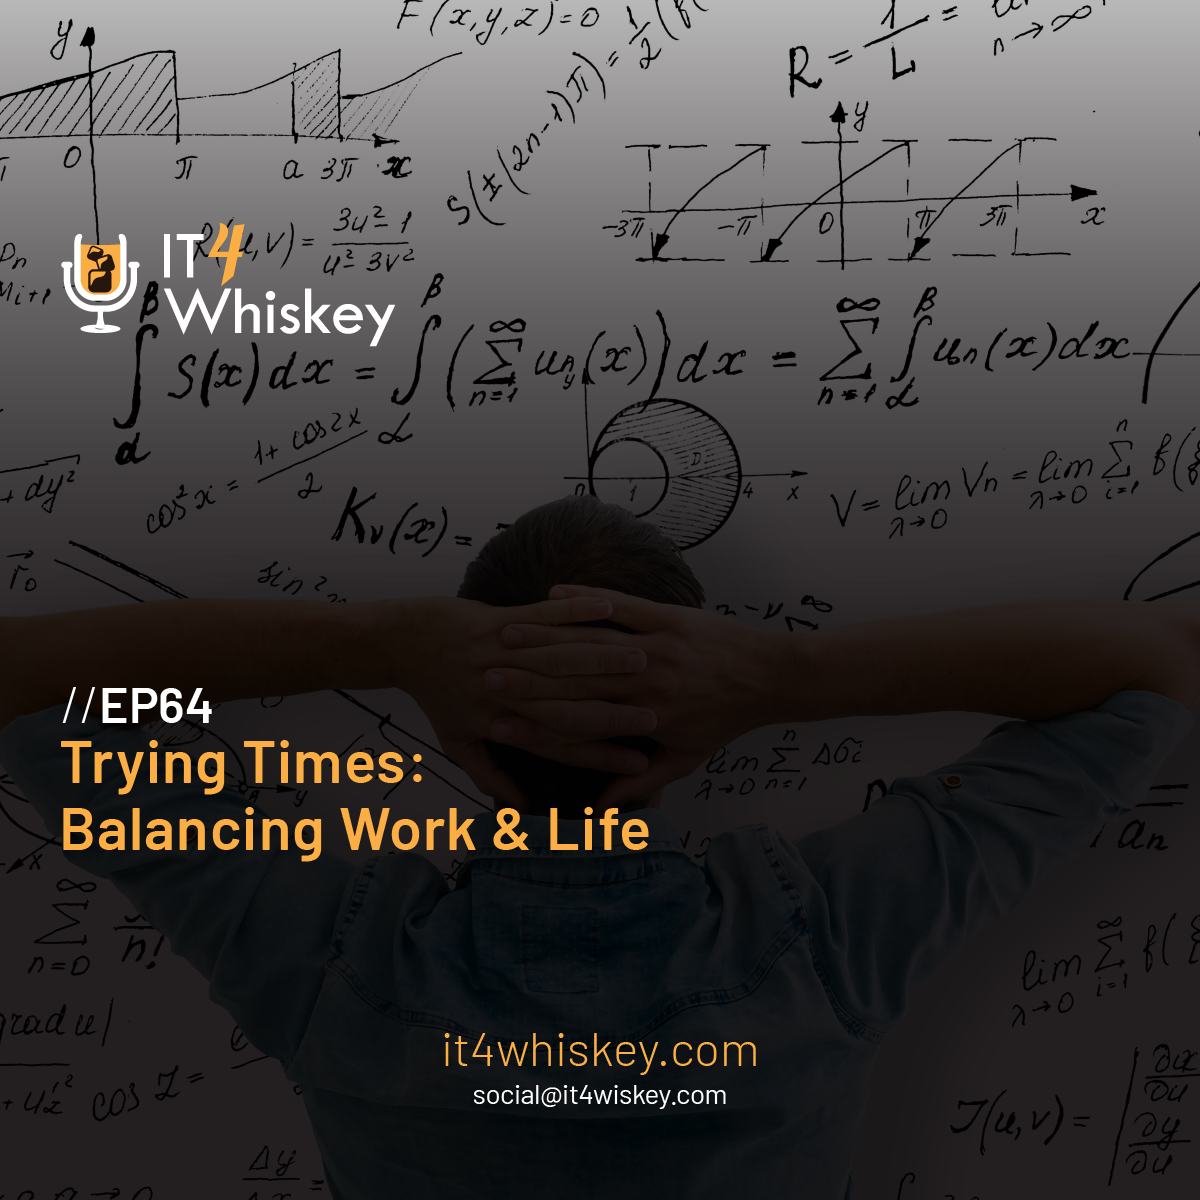 EP64 - Trying Times: Balancing Work & Life